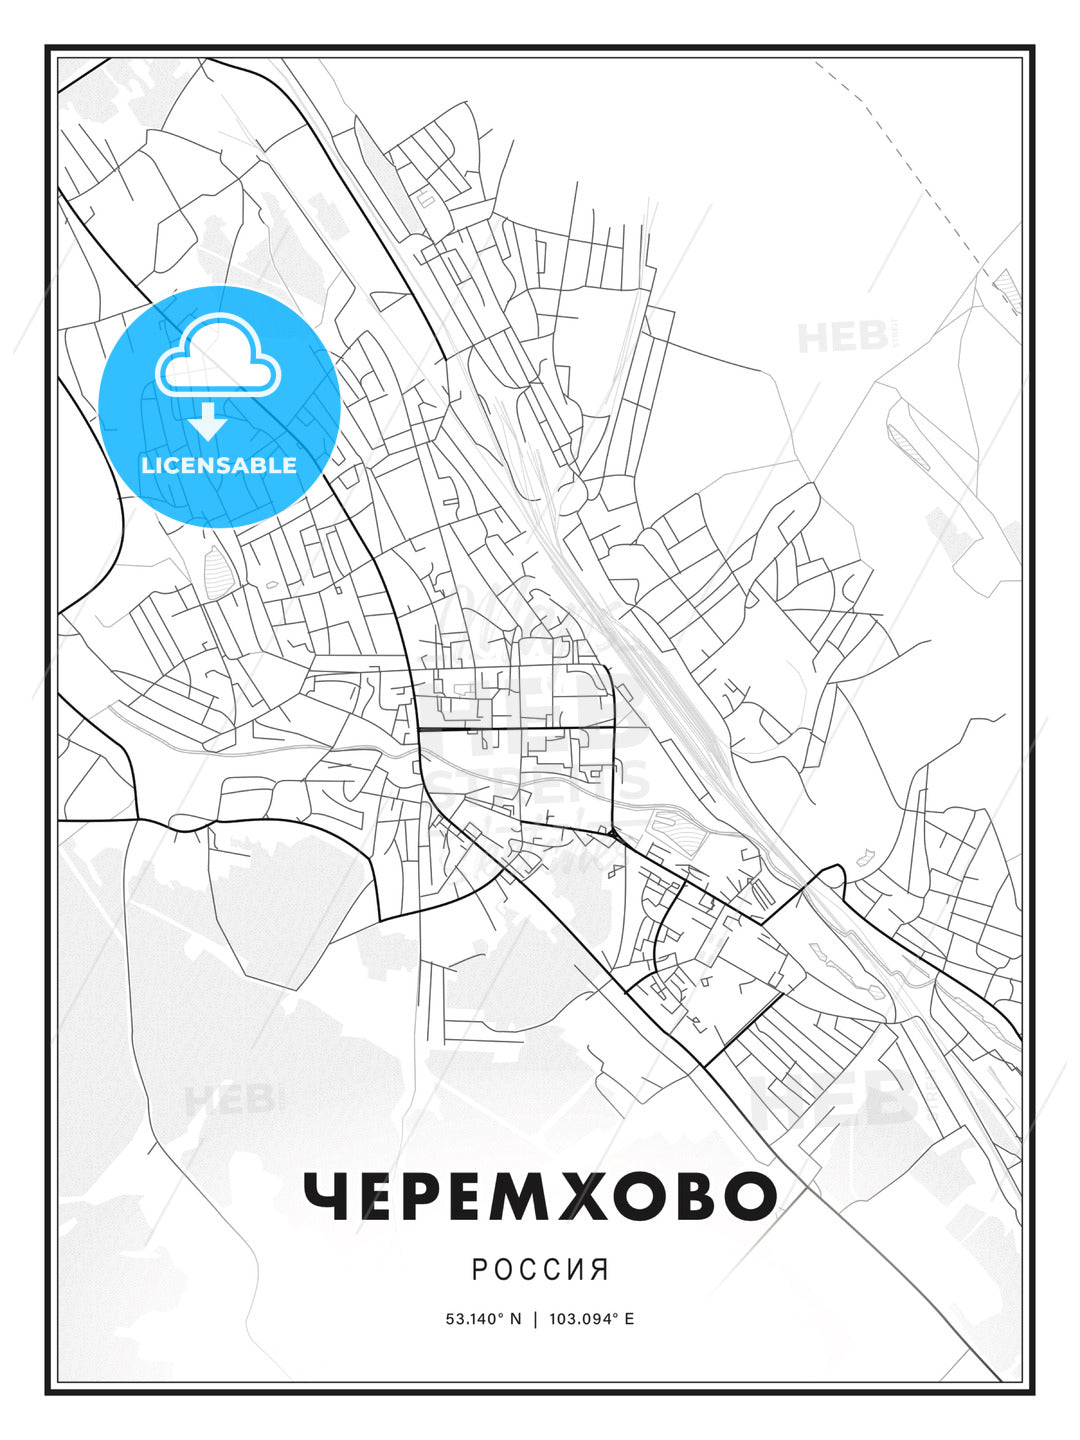 ЧЕРЕМХОВО / Cheremkhovo, Russia, Modern Print Template in Various Formats - HEBSTREITS Sketches